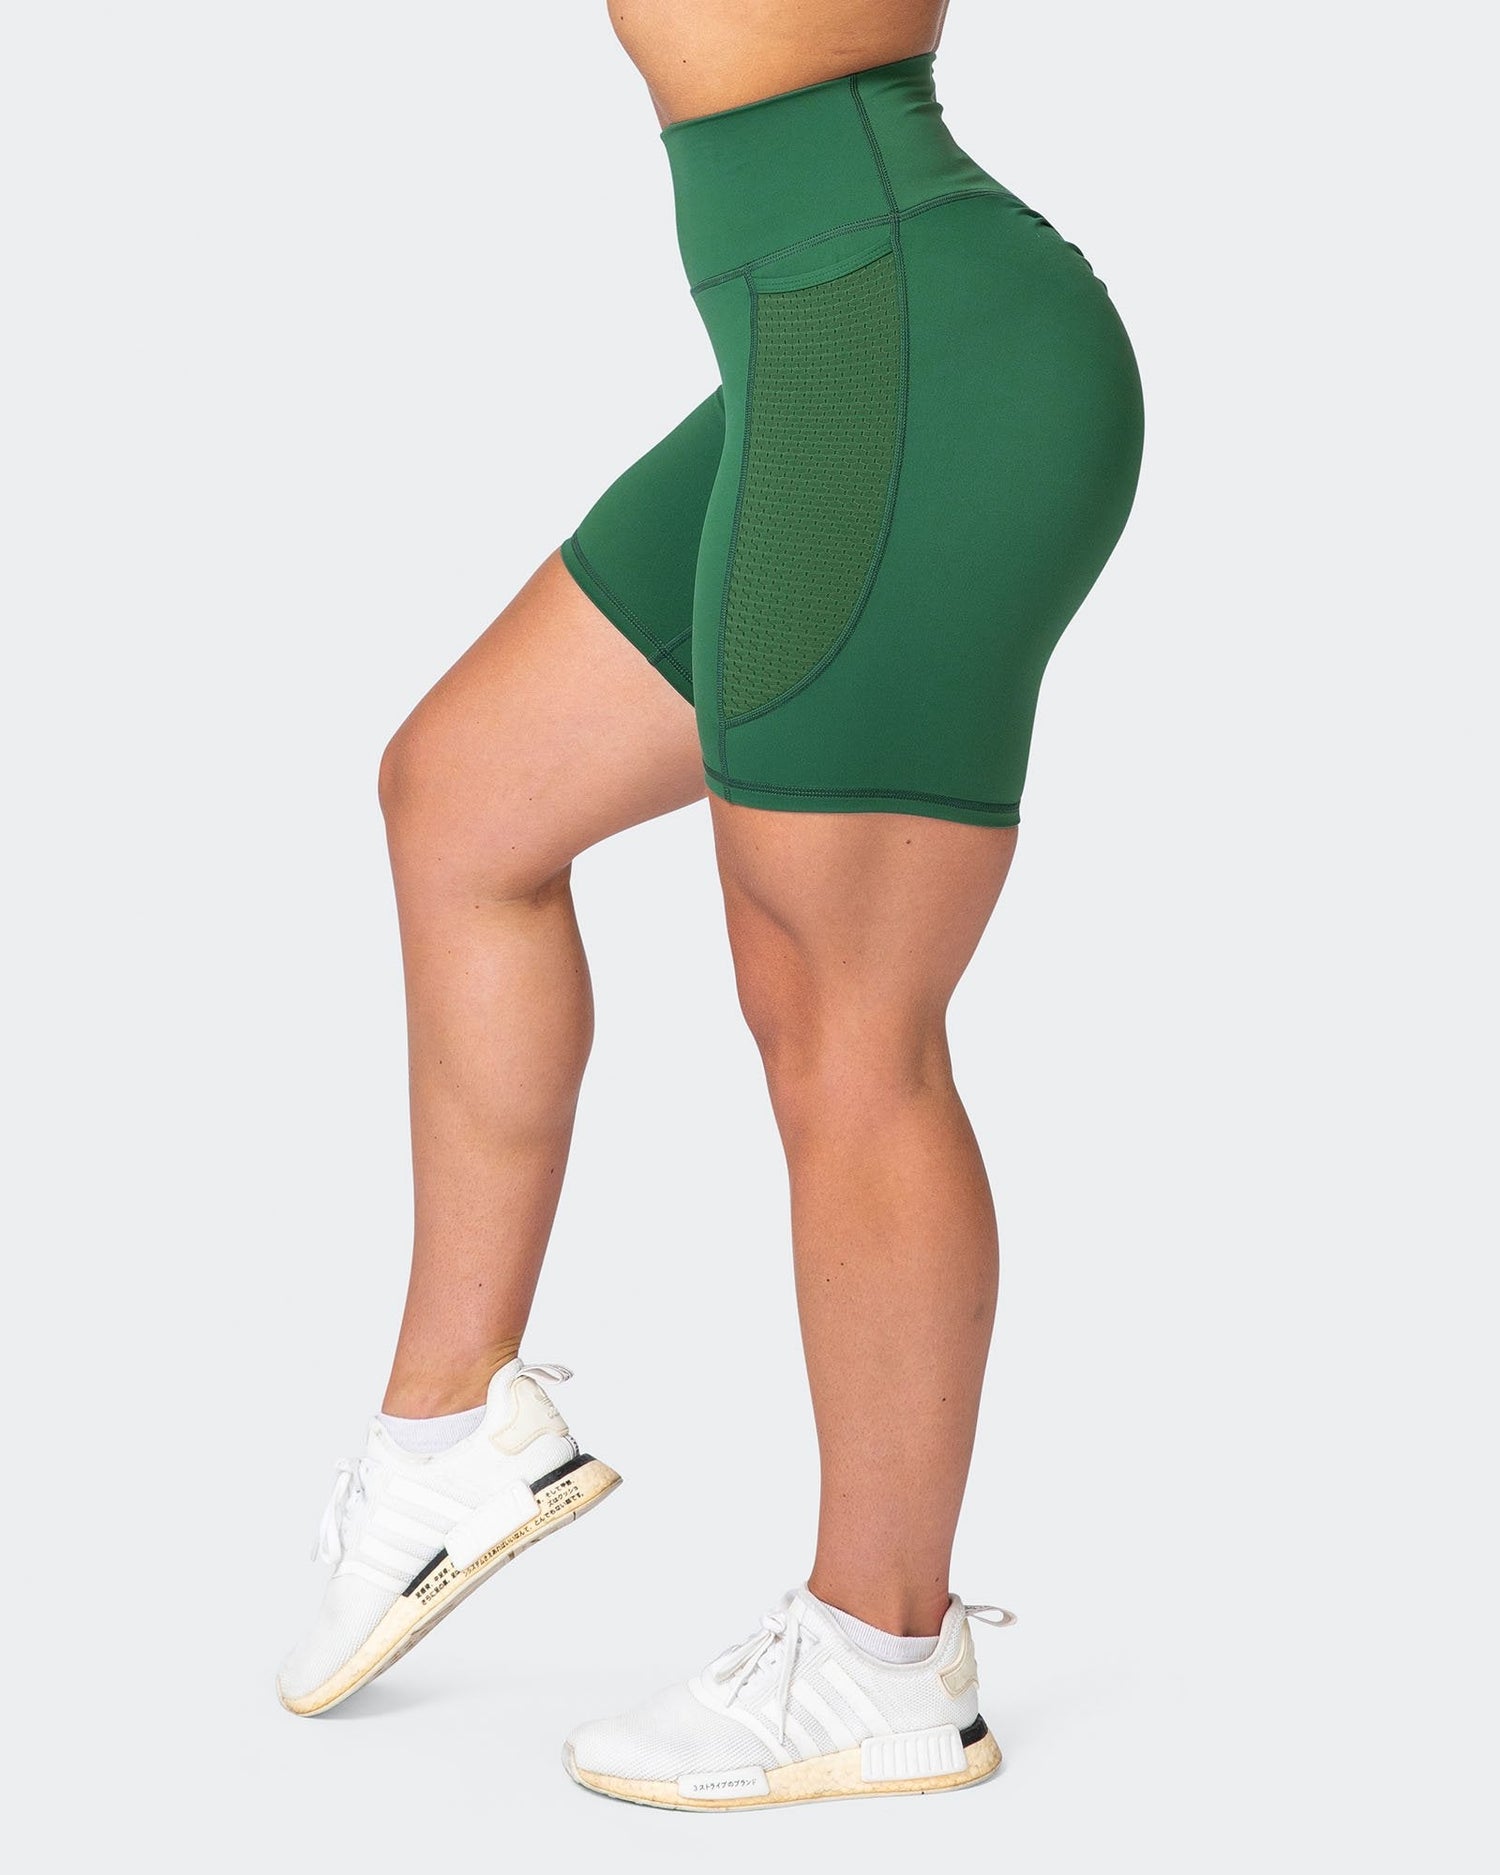 AMRAP Bike Shorts - Fir Green